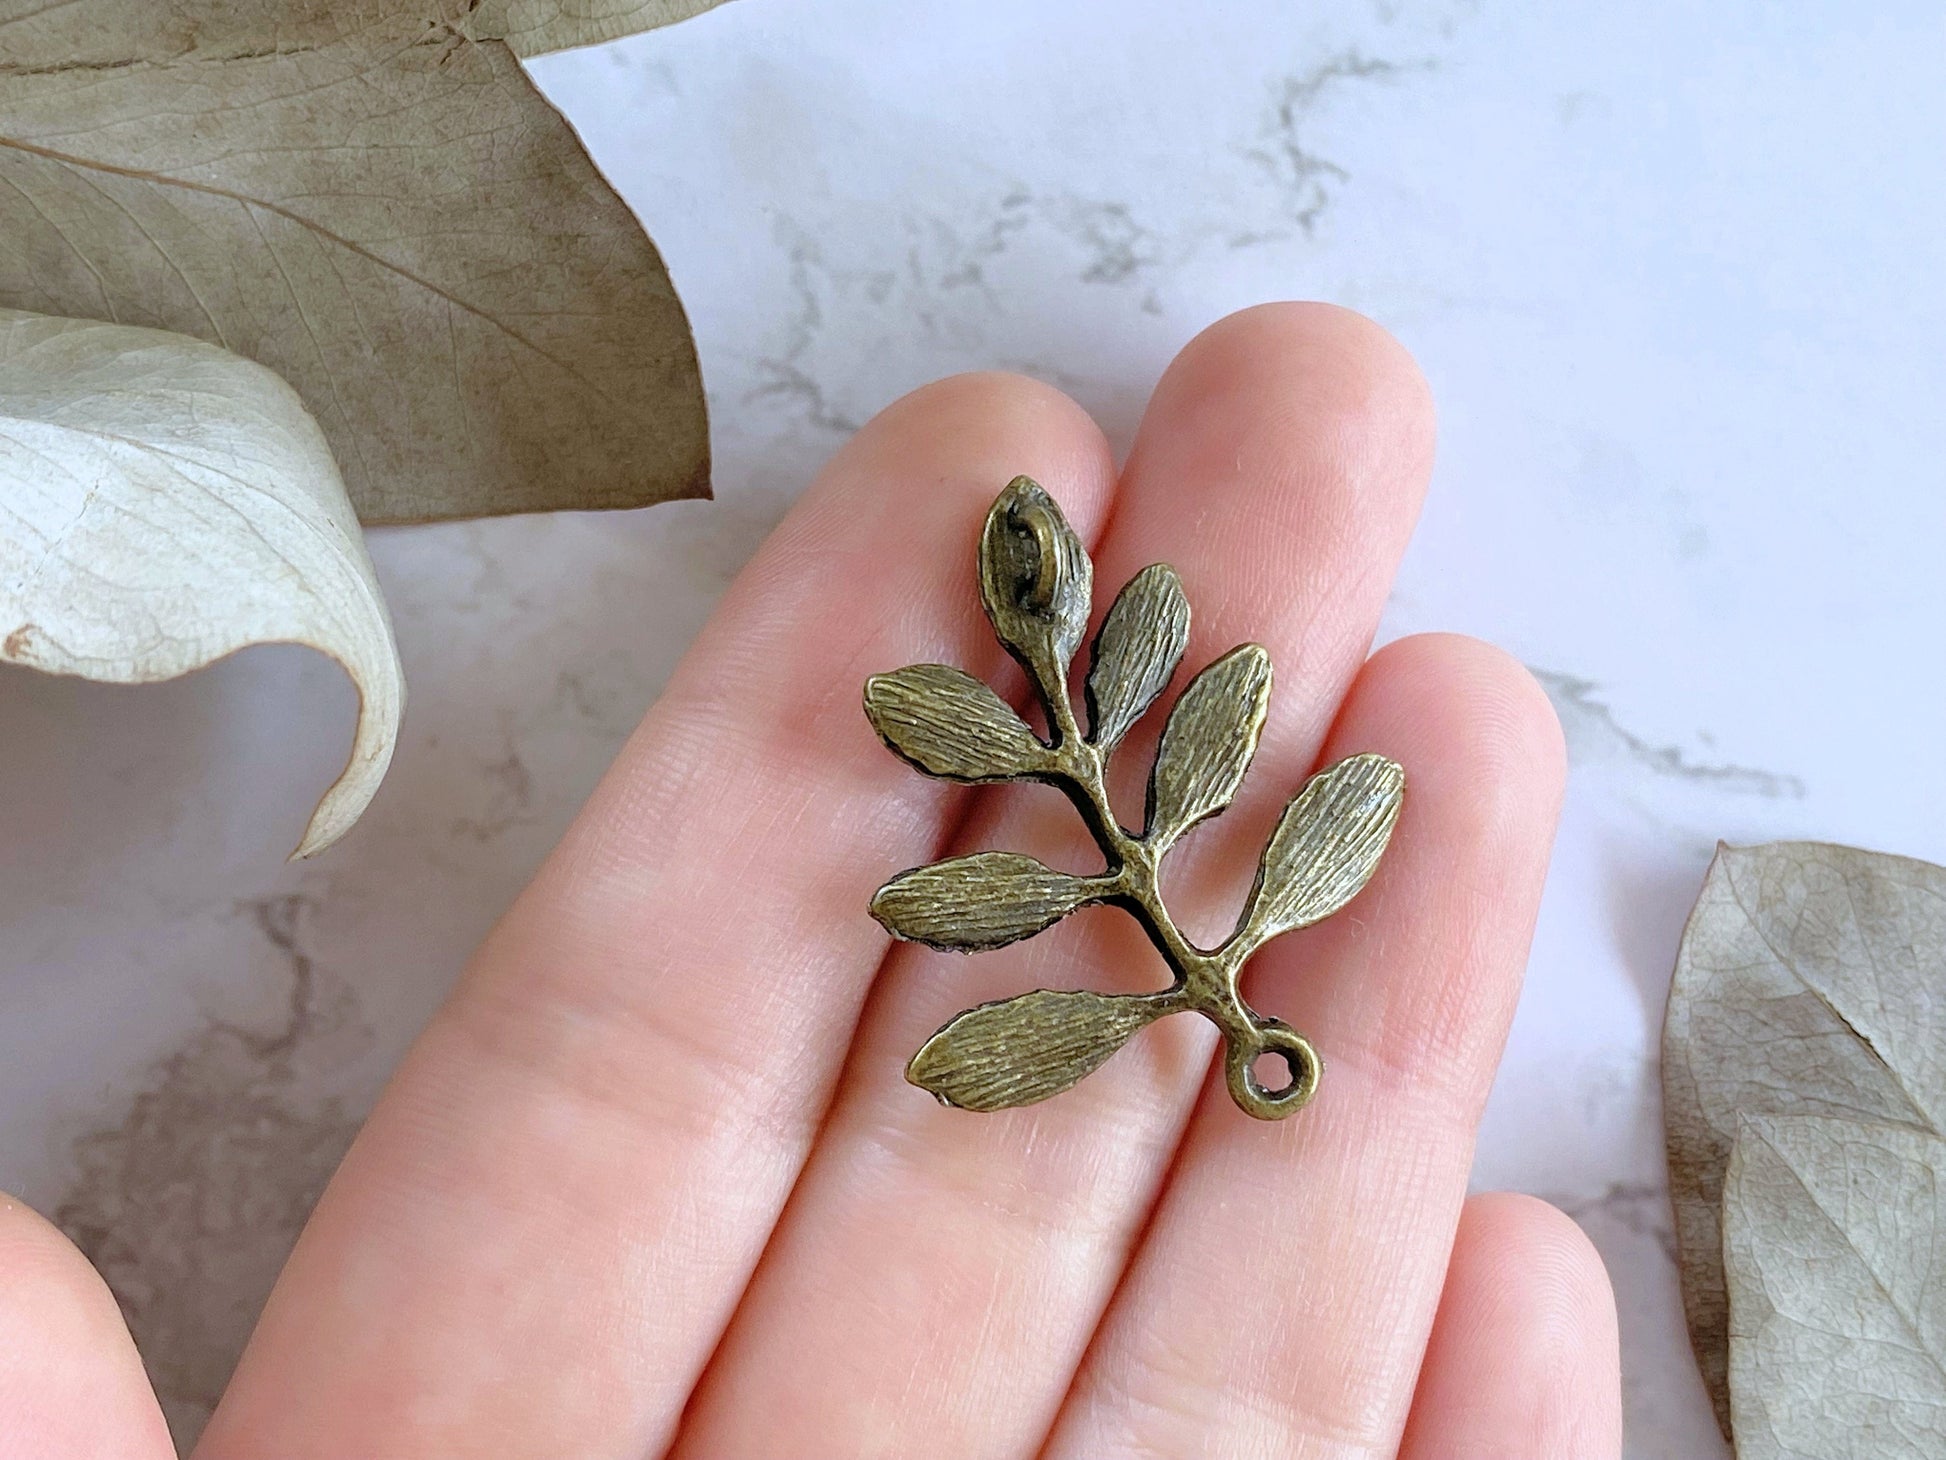 Filigree Leaf Shape Jewelry Making Charm Findings Vialysa